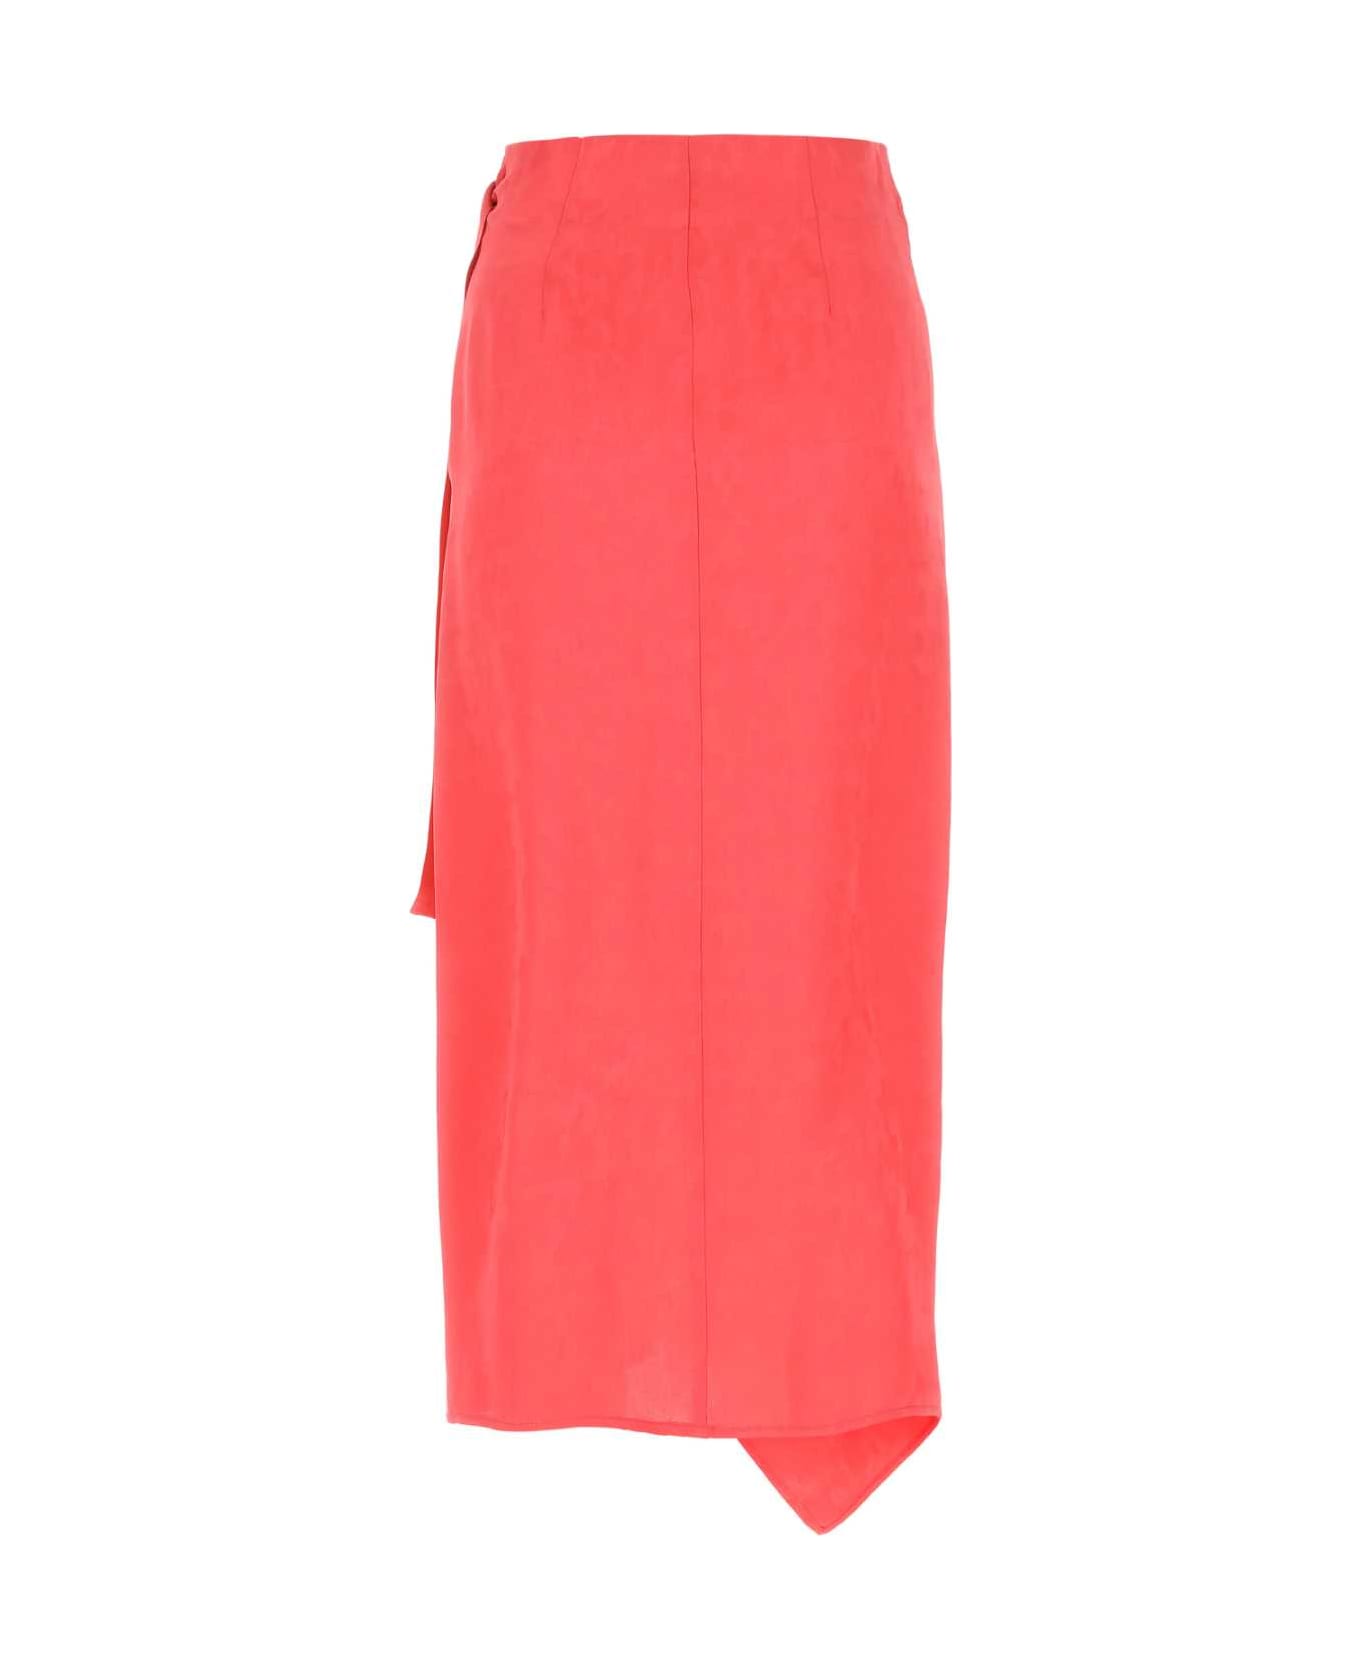 MSGM Coral Satin Skirt - 13 スカート